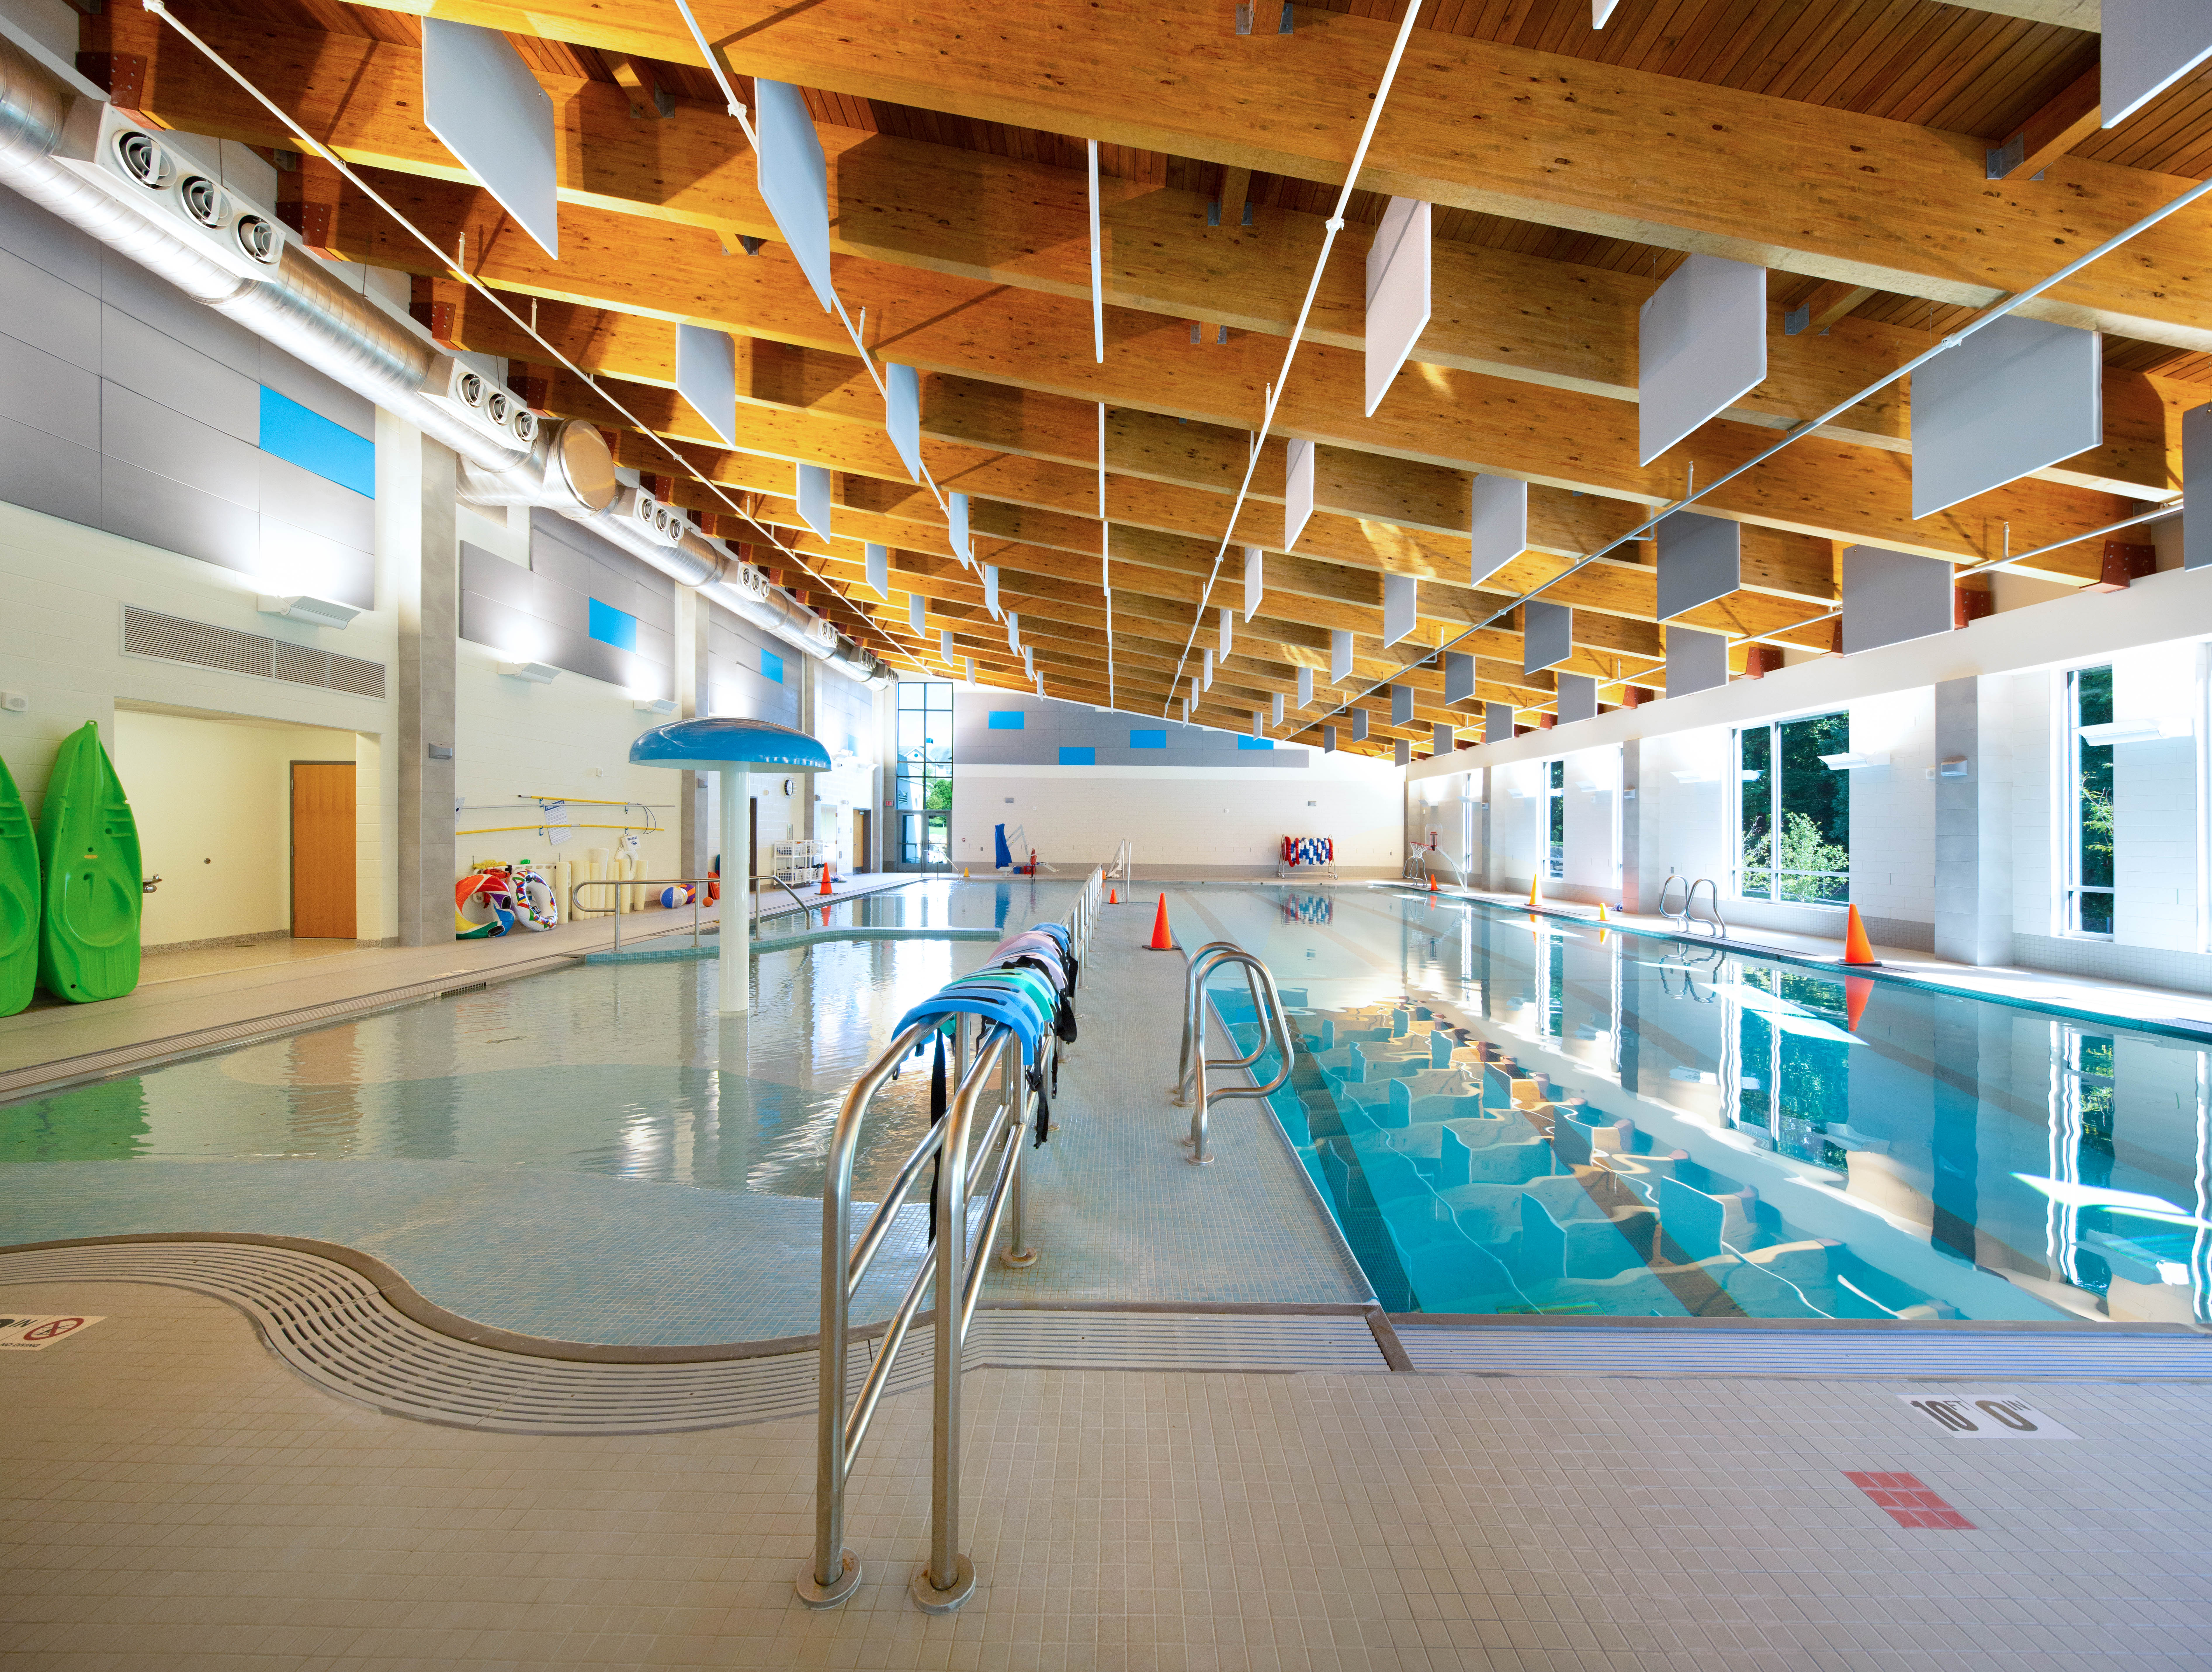 Indoor pool within the Pilot School that incorporates MEP engineering design   